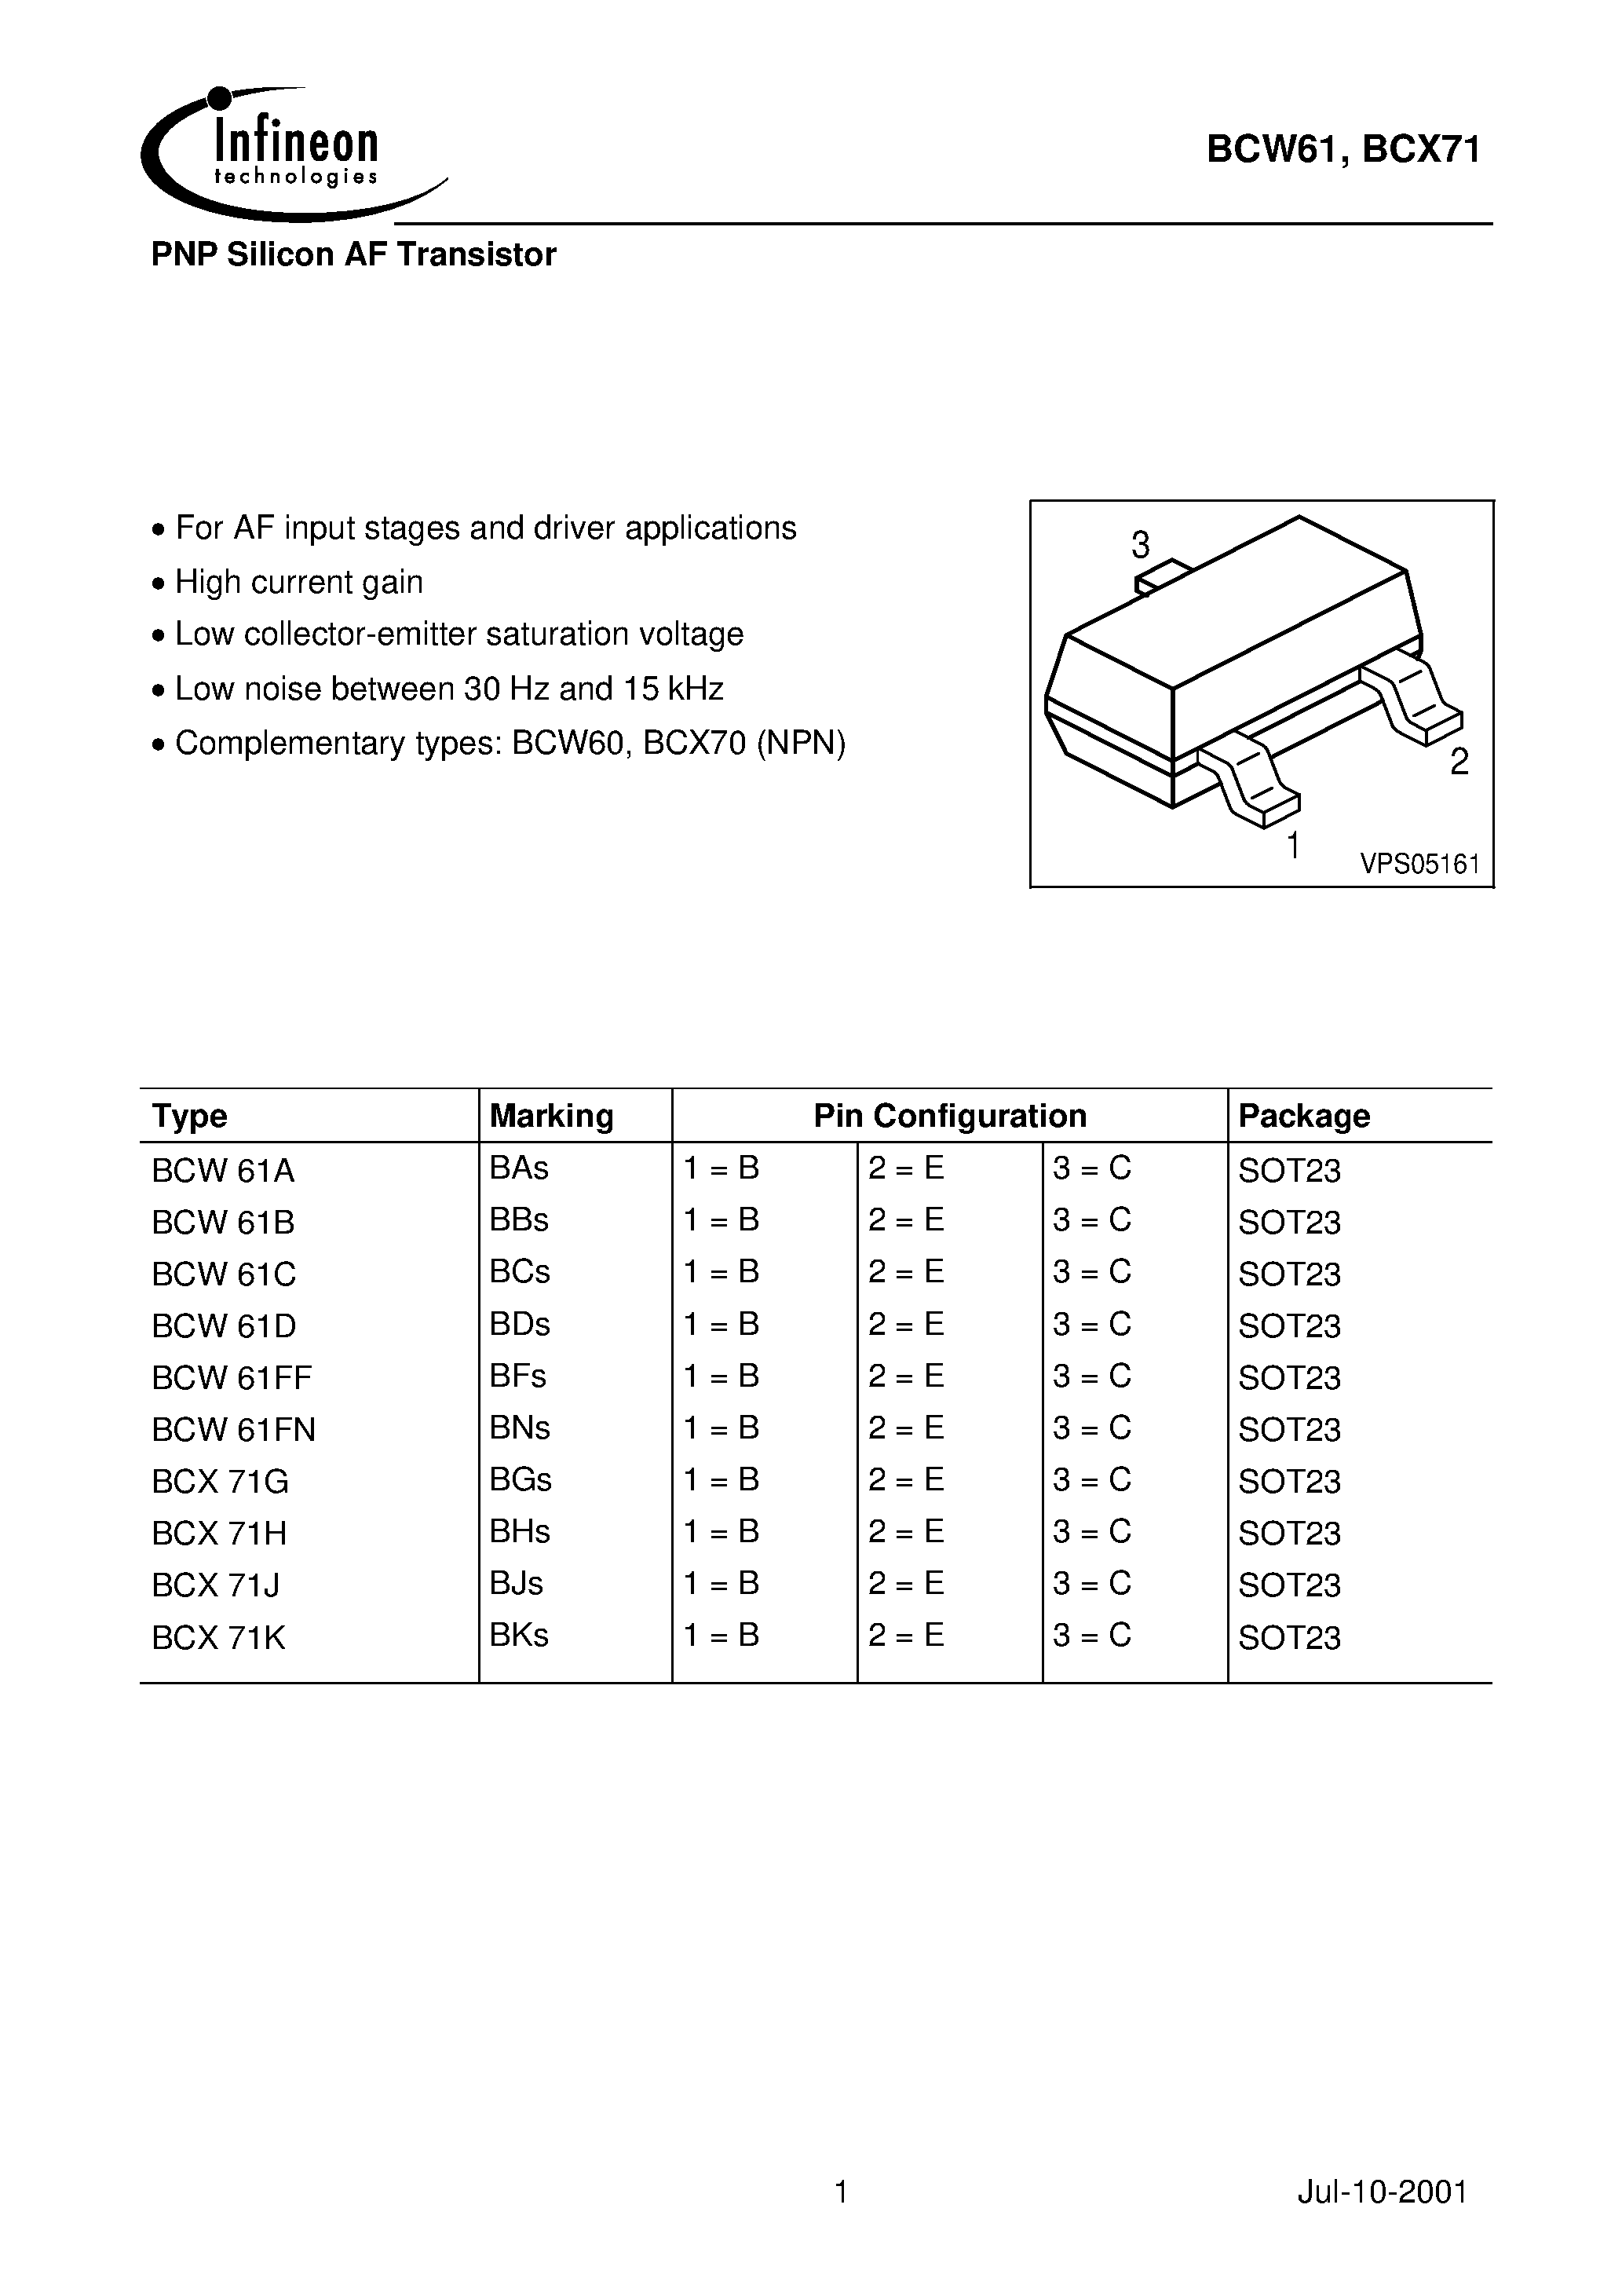 Datasheet BCX71G - PNP Silicon AF Transistor page 1